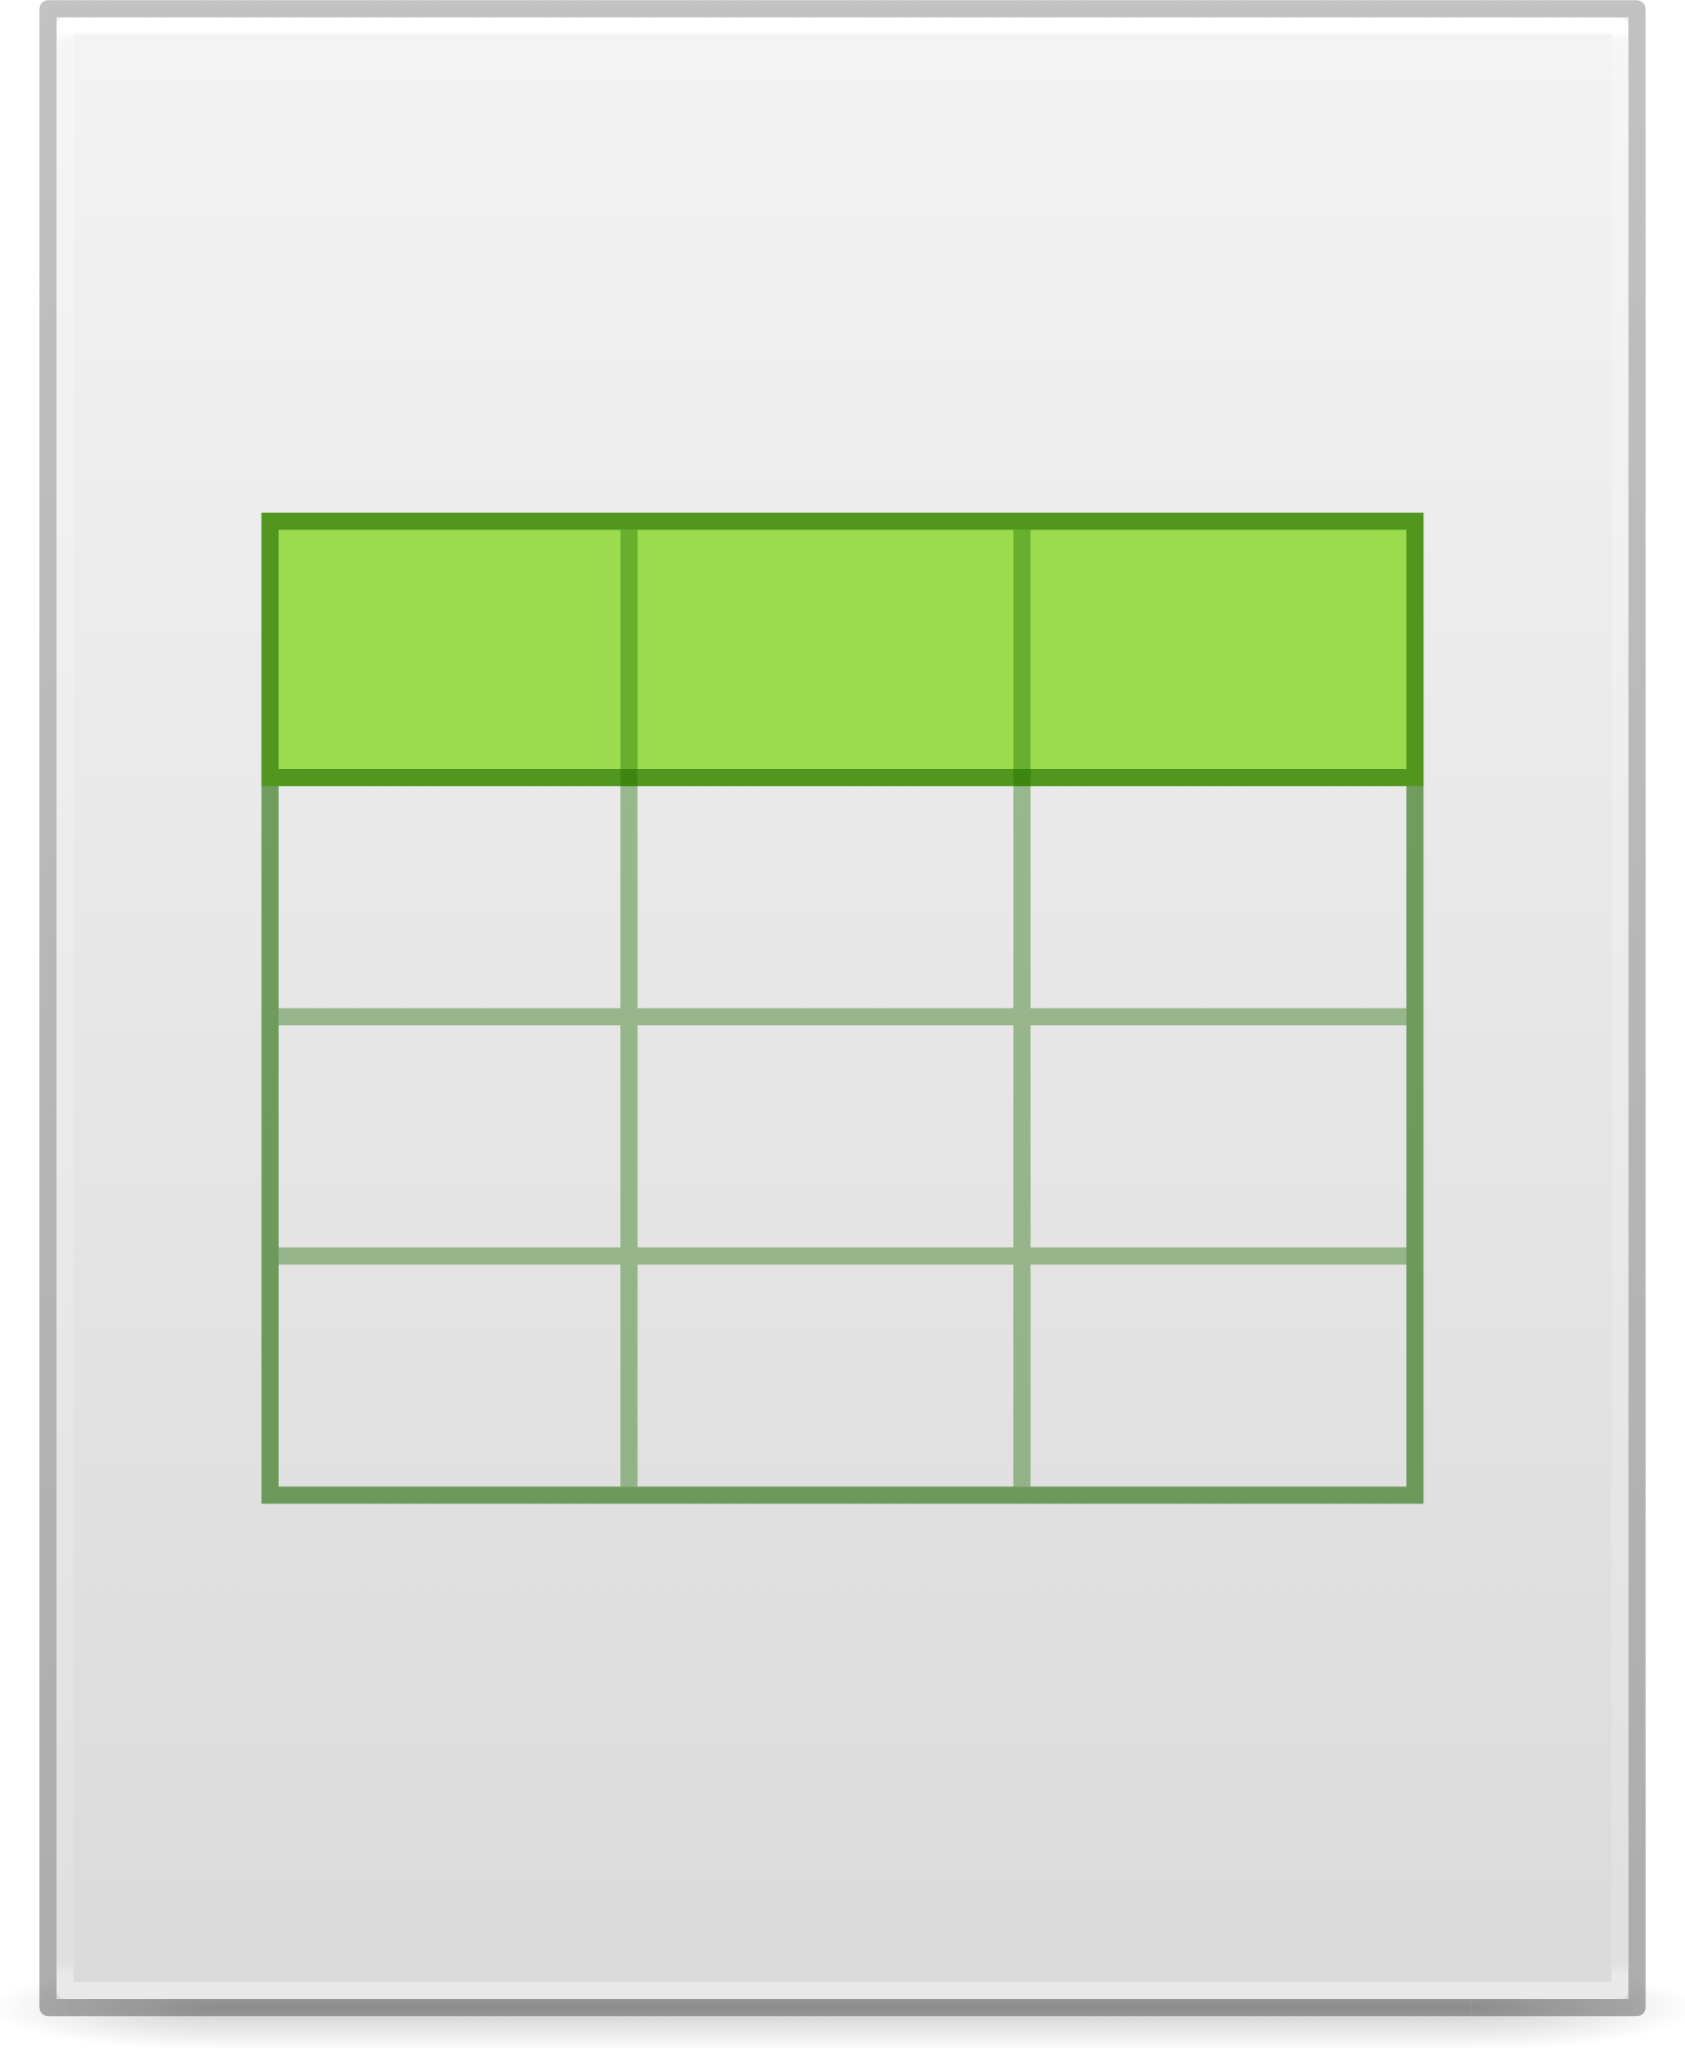 x office spreadsheet icon